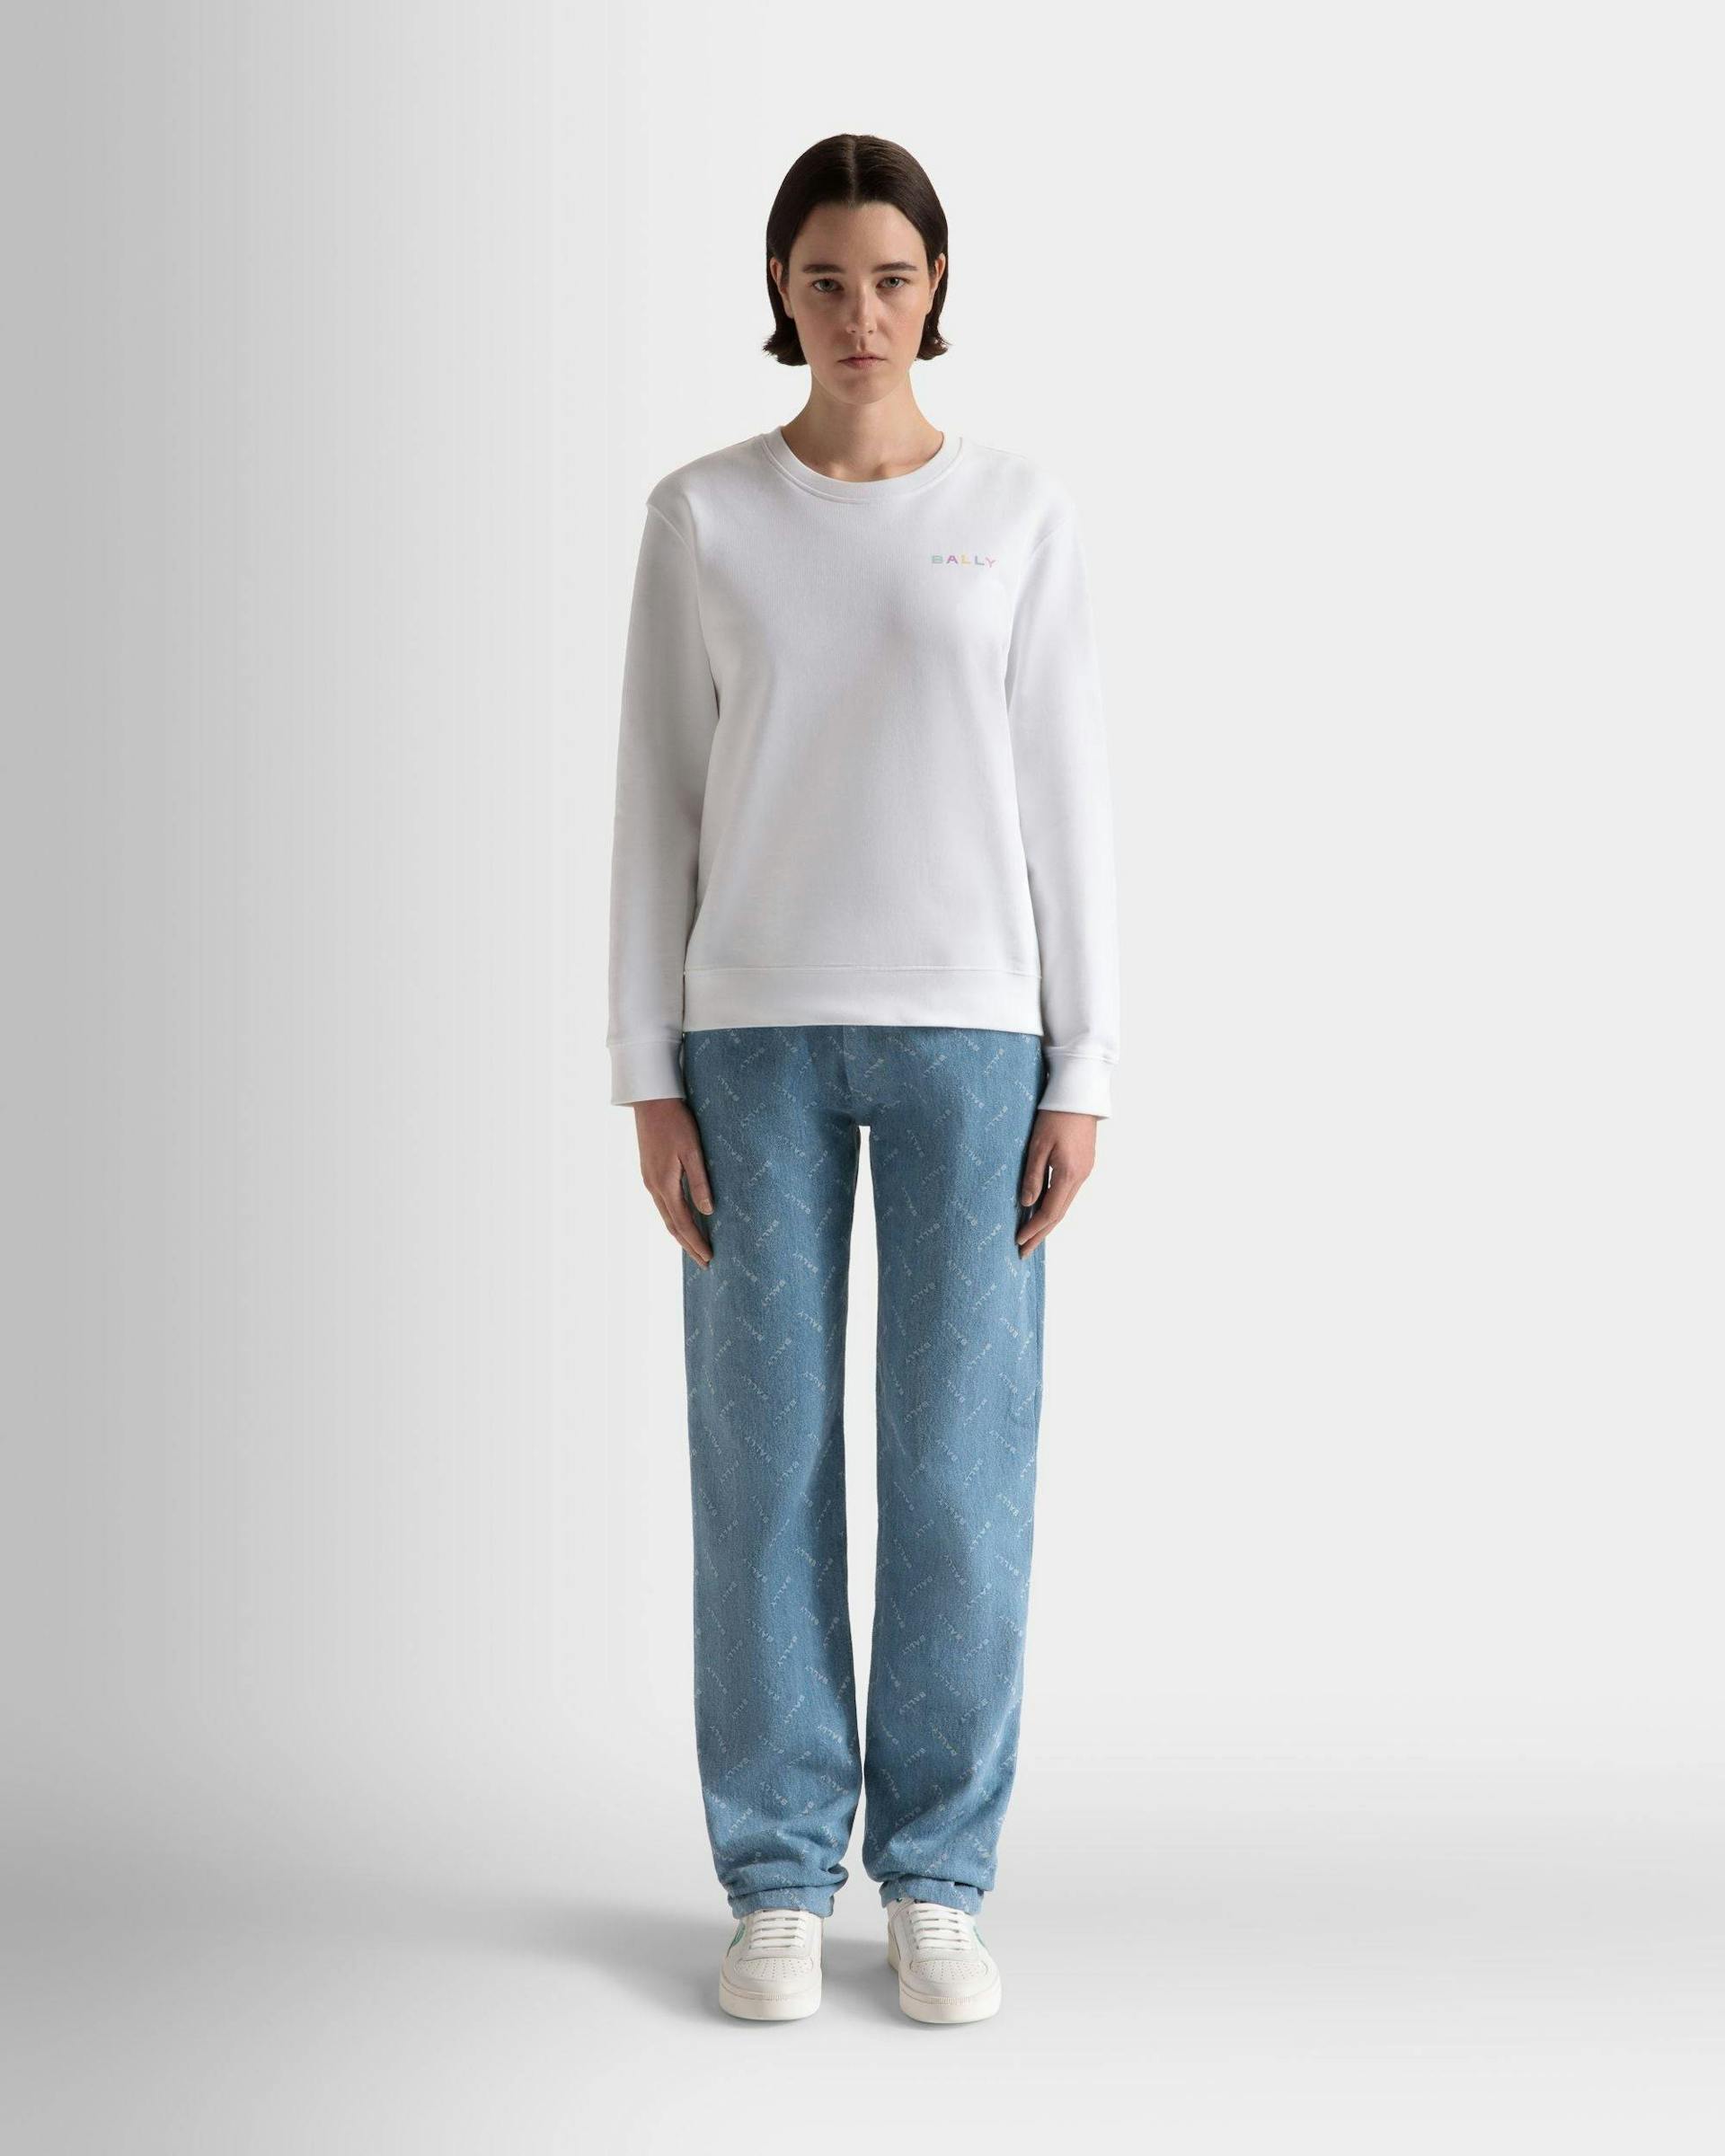 Women's Crewneck Sweatshirt in White Cotton | Bally | On Model Front